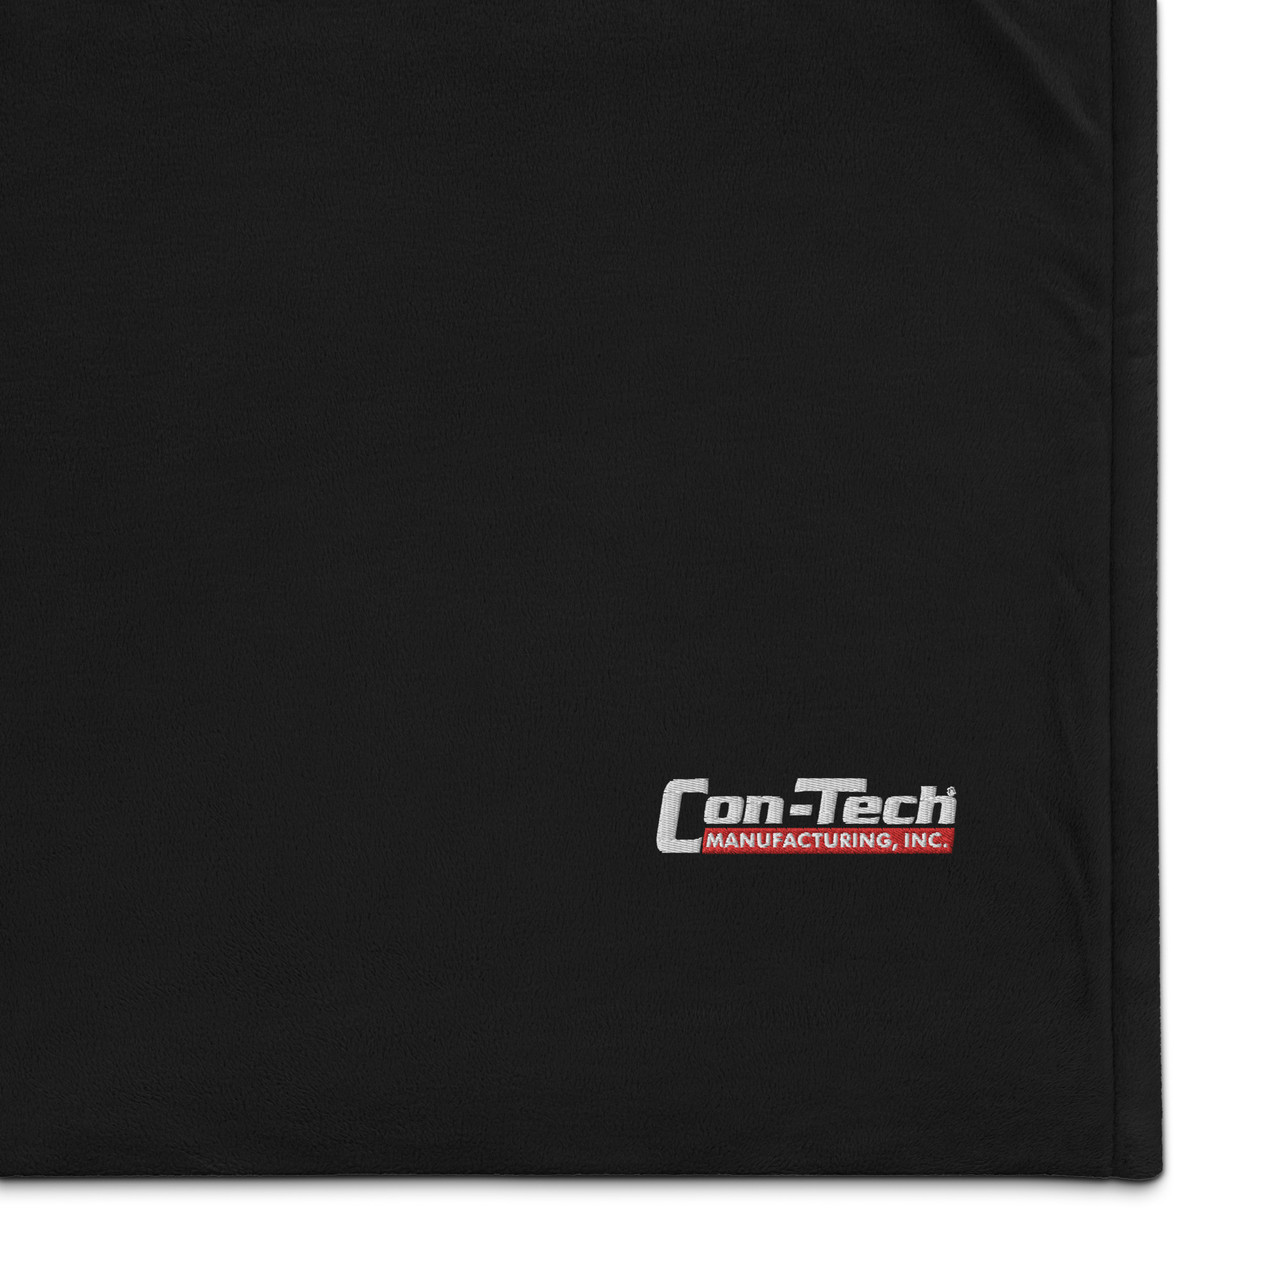 Premium sherpa blanket - Con-Tech Manufacturing Merch Store